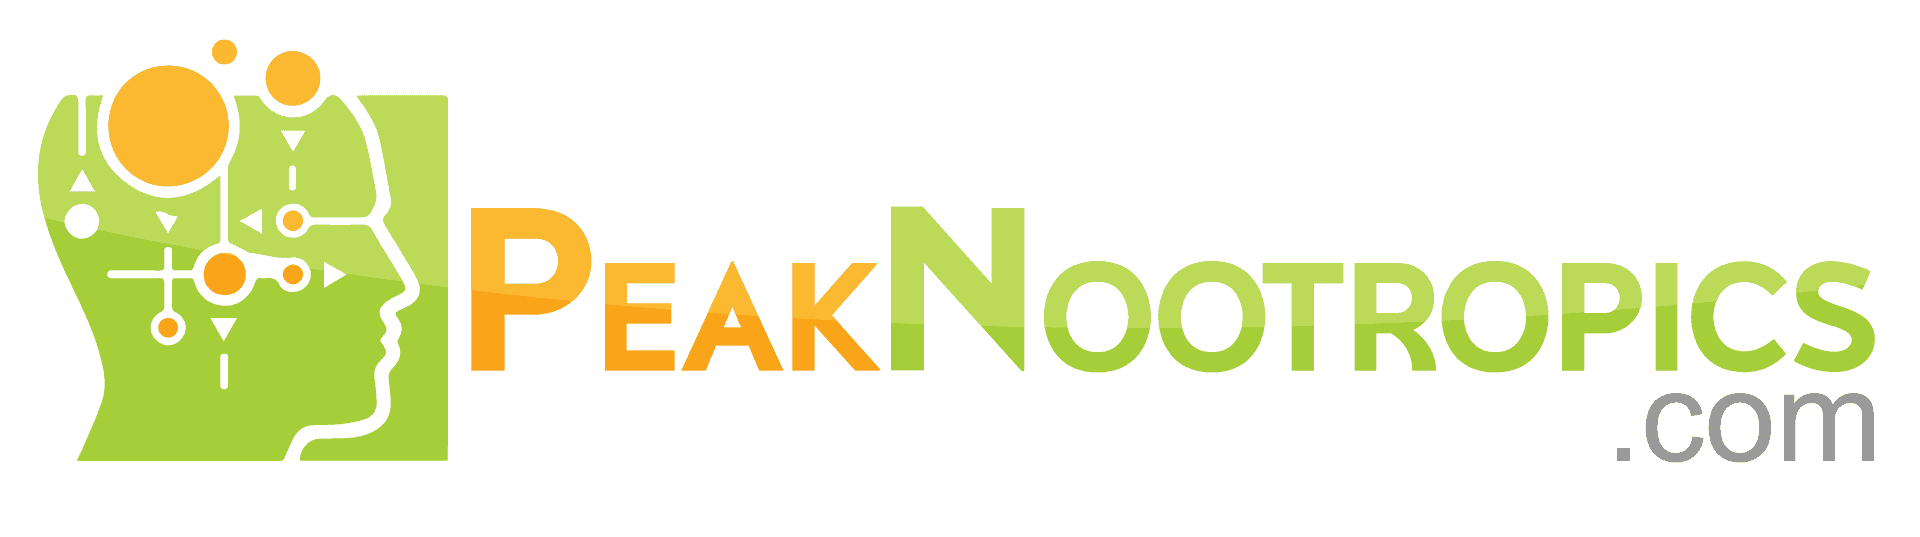 peak nootropics logo e1555430675795